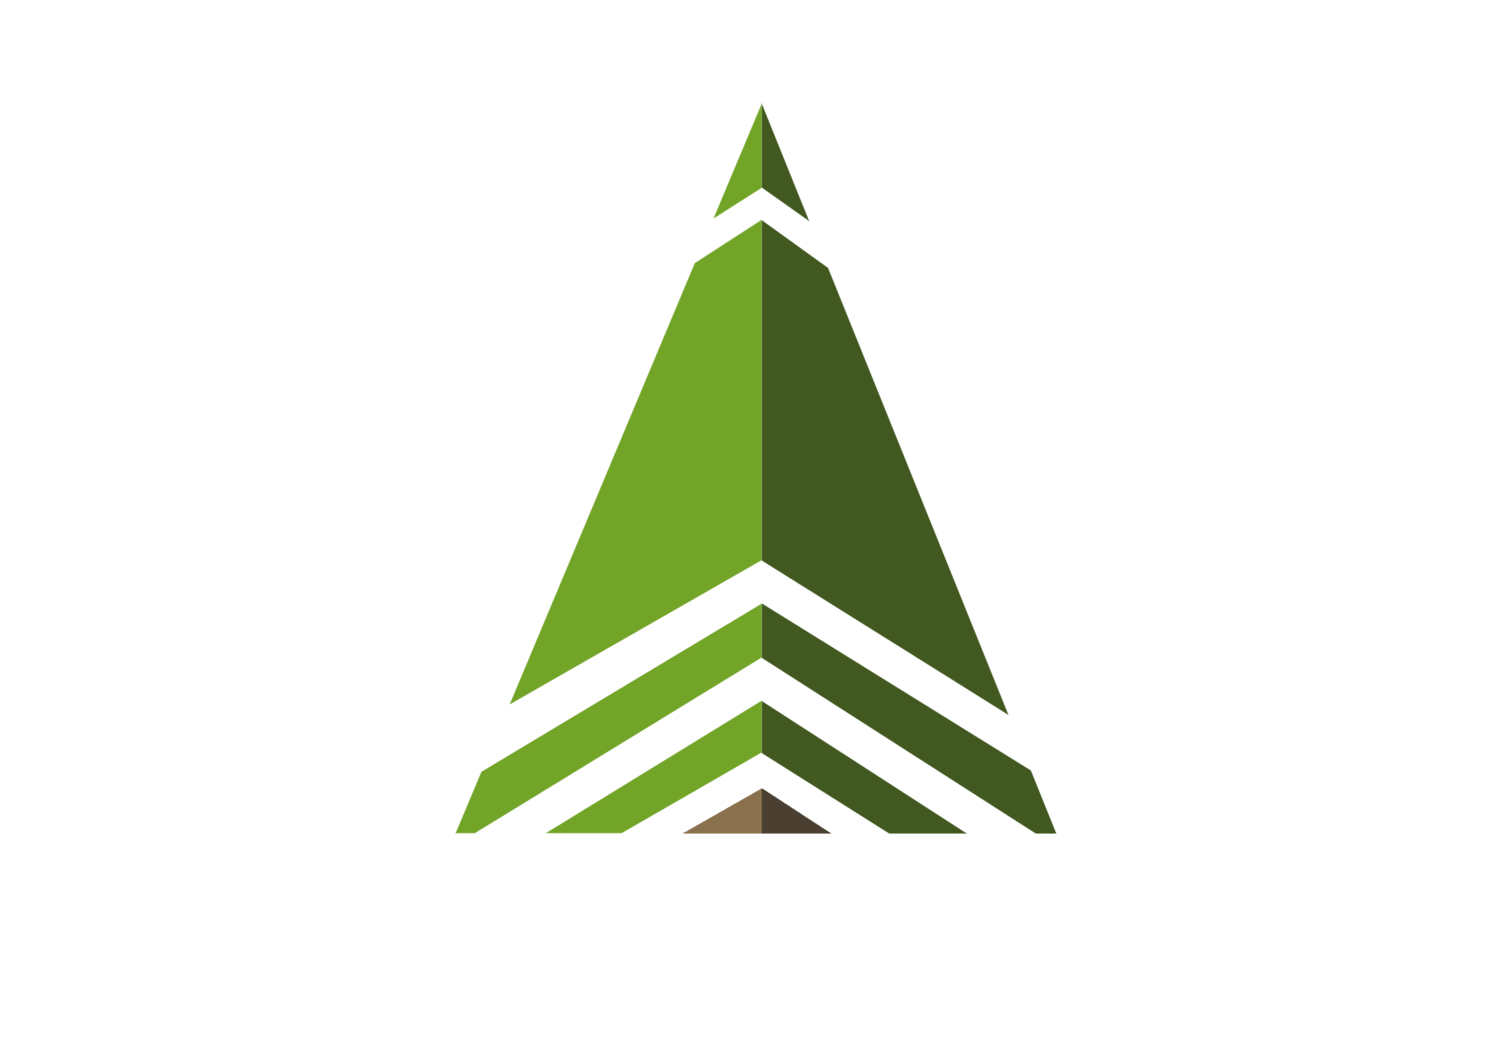 PINE COURT